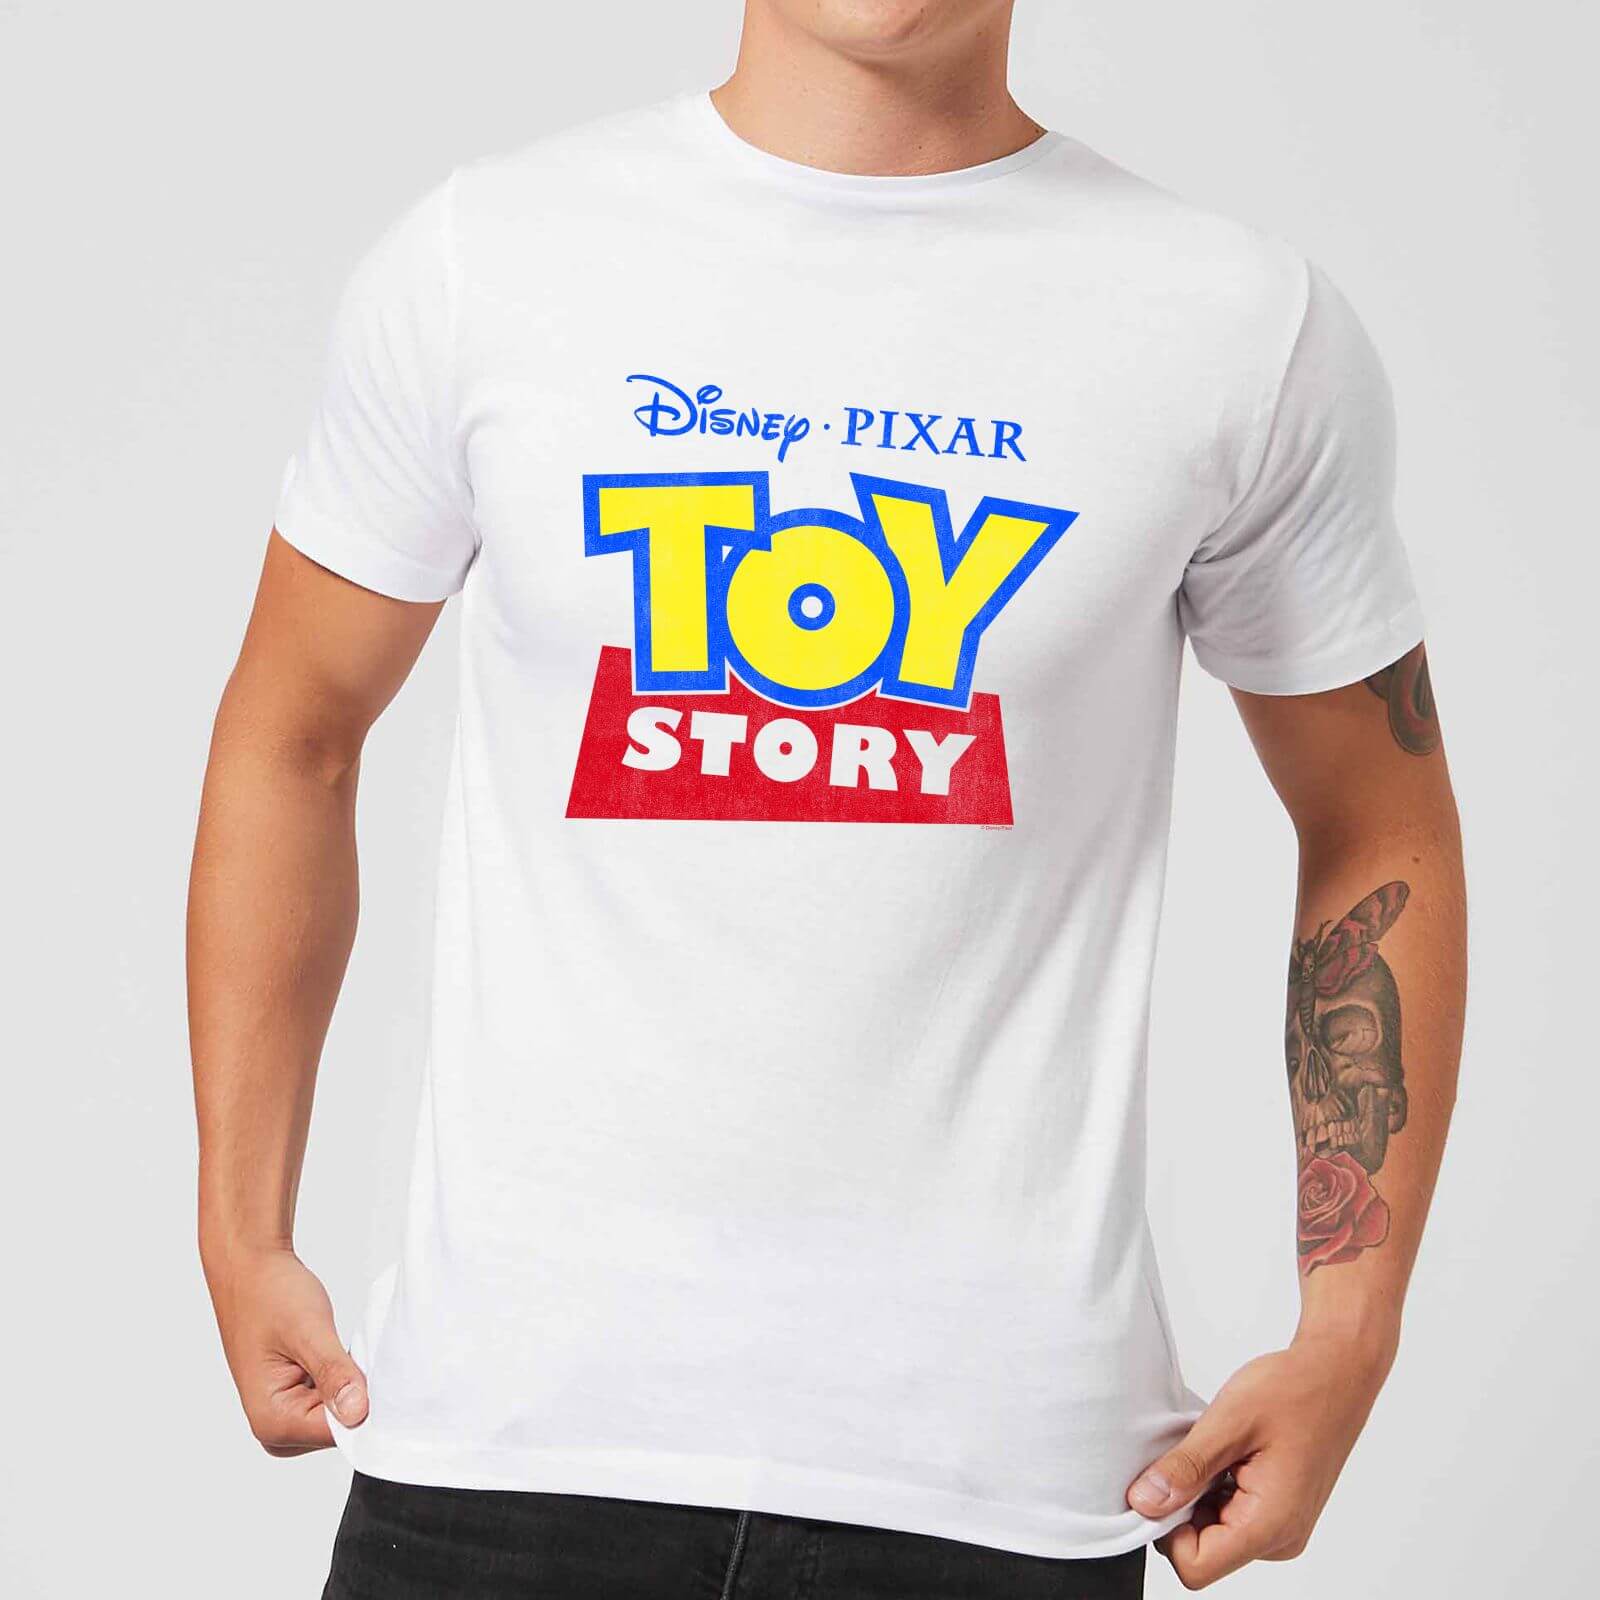 toy story shirts near me